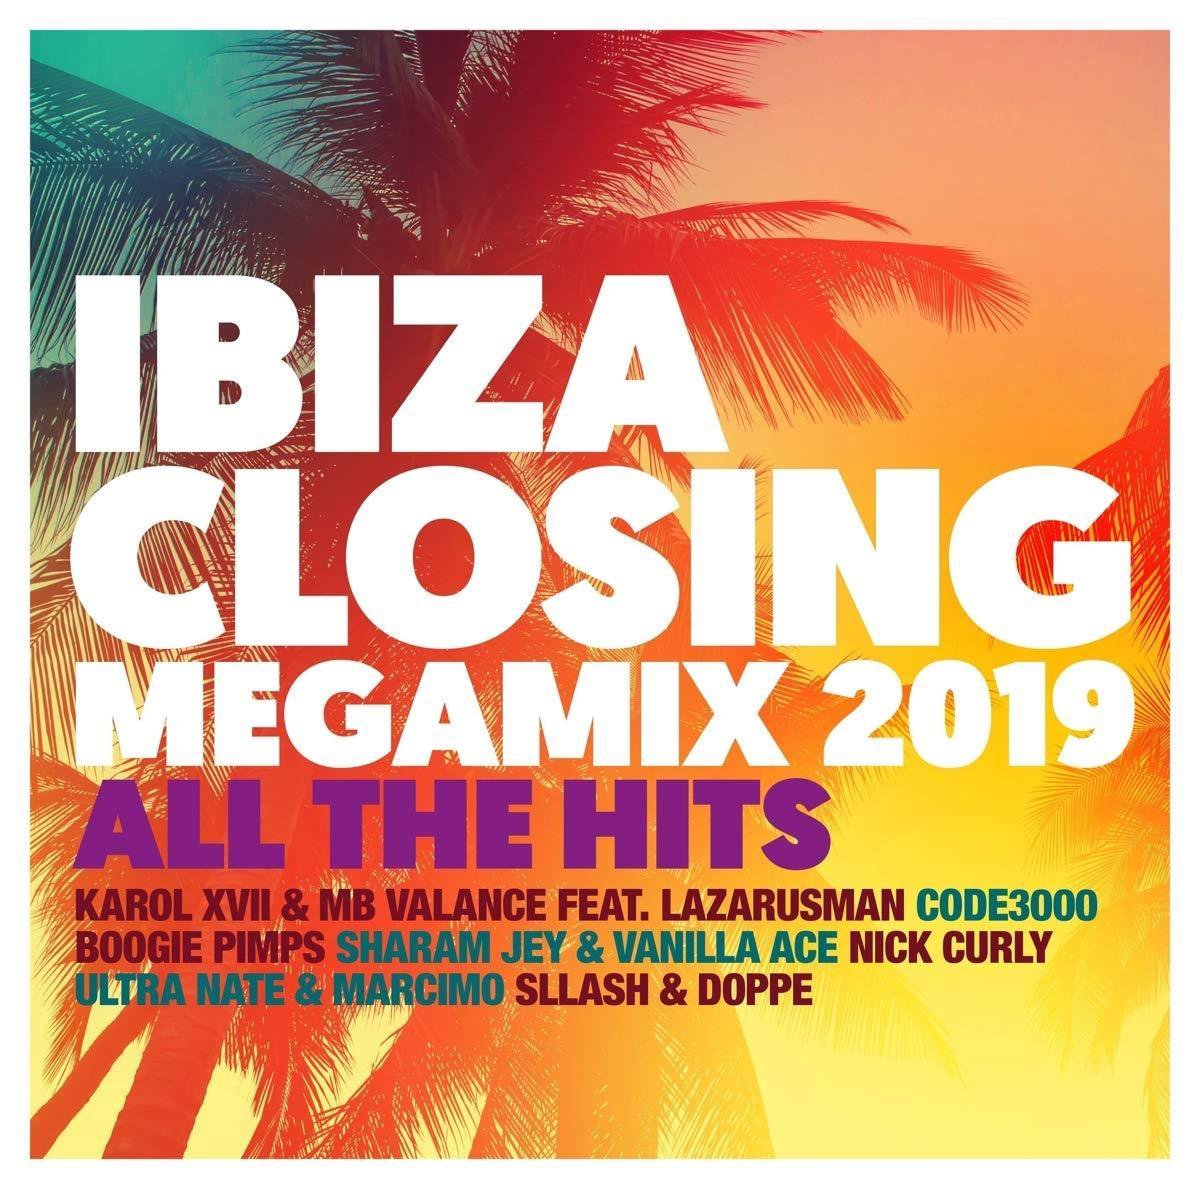 Ibiza Closing Megamix 2019-All The Hits, various artists | CD (album ...